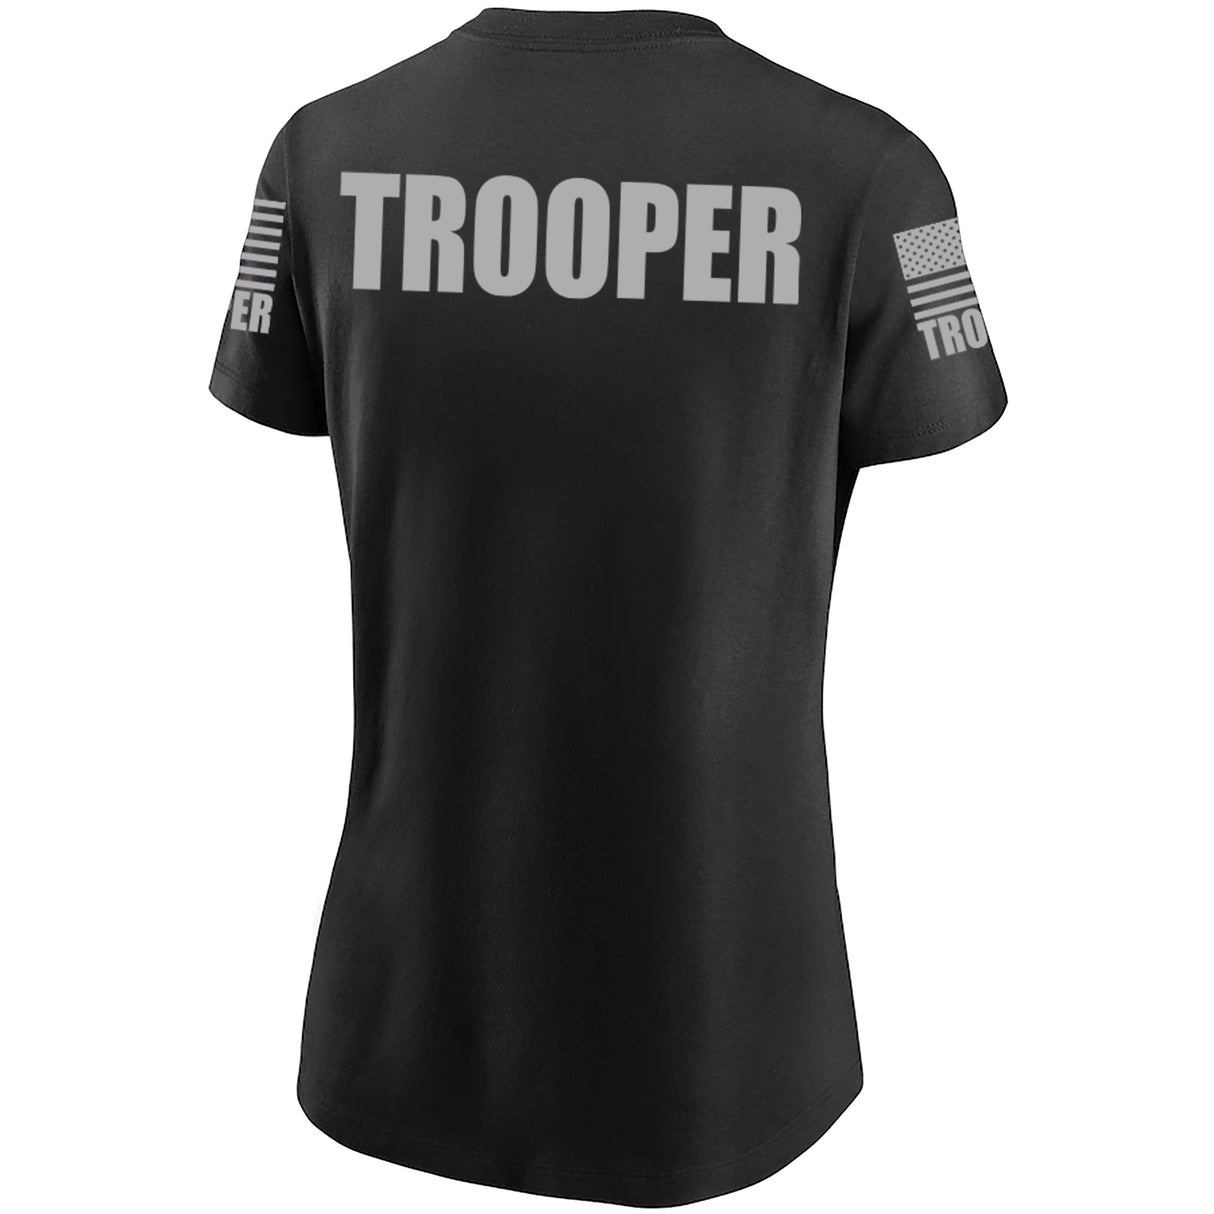 Black Trooper Women's Shirt - Short Sleeve - FEDS Apparel